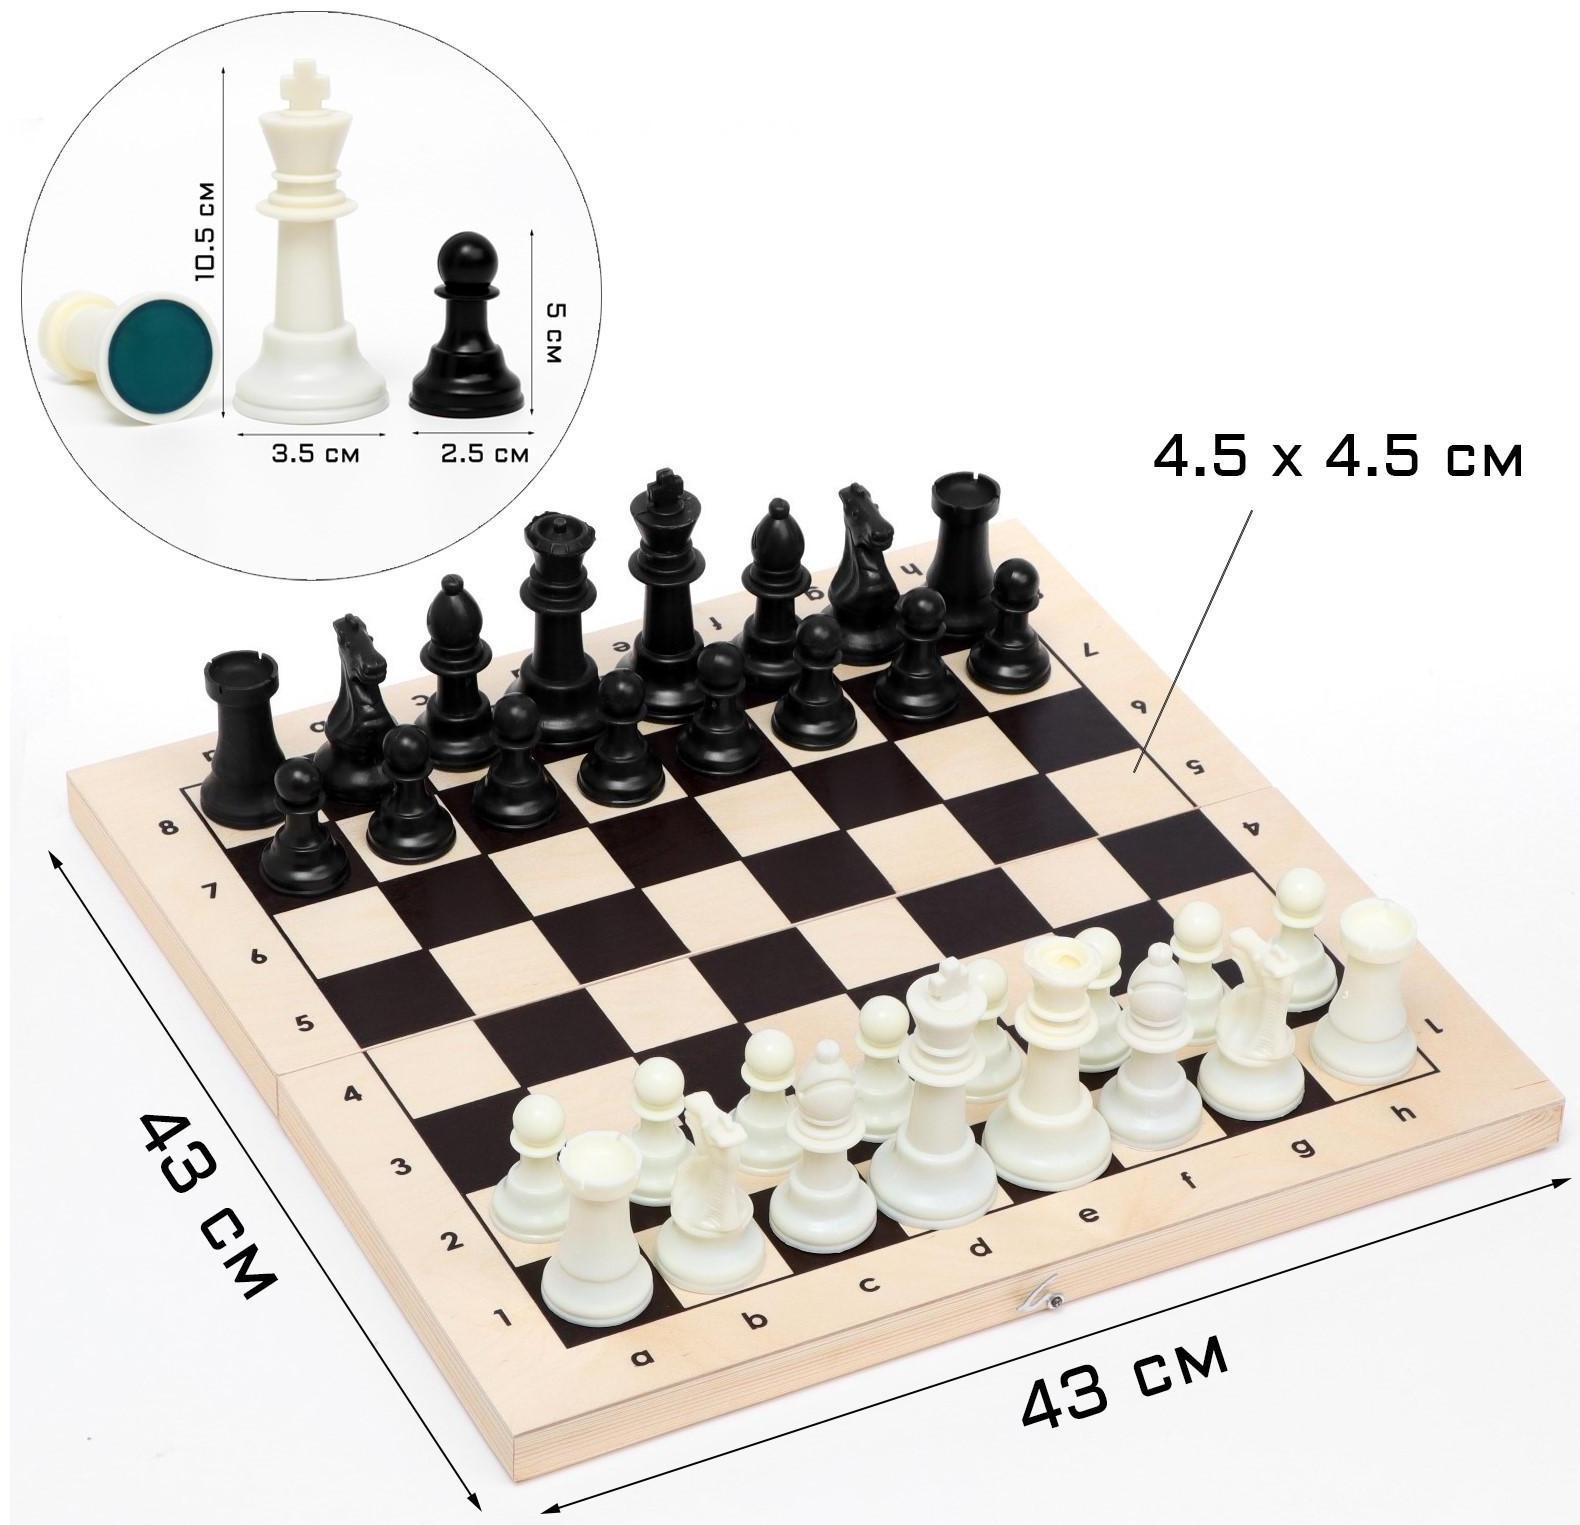 Шахматы турнирные, доска дерево 43 х 43 см, фигуры пластик, король h=10.5 см, пешка h=5 см